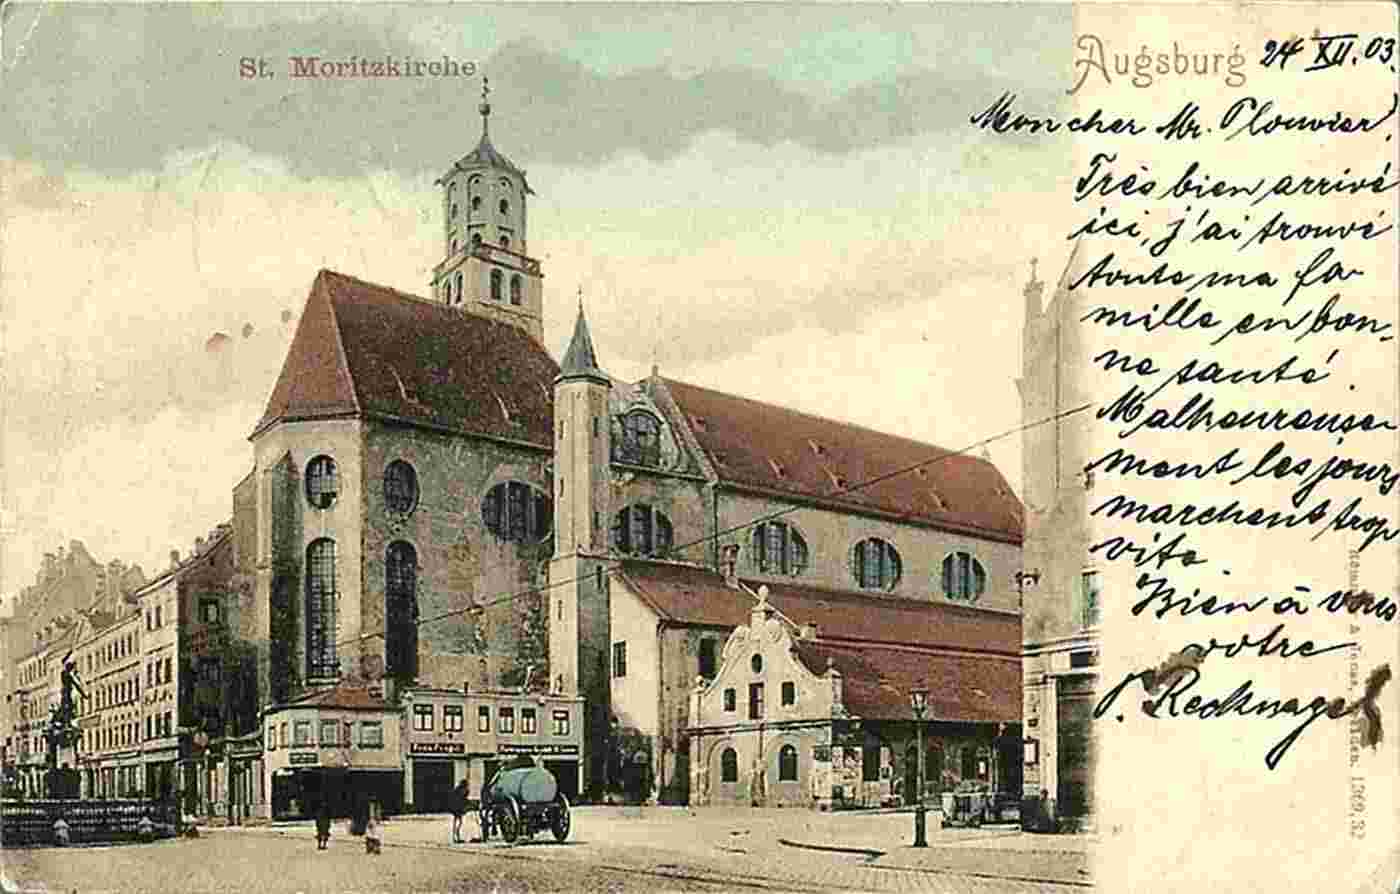 Augsburg. St. Moritzkirche, 1903